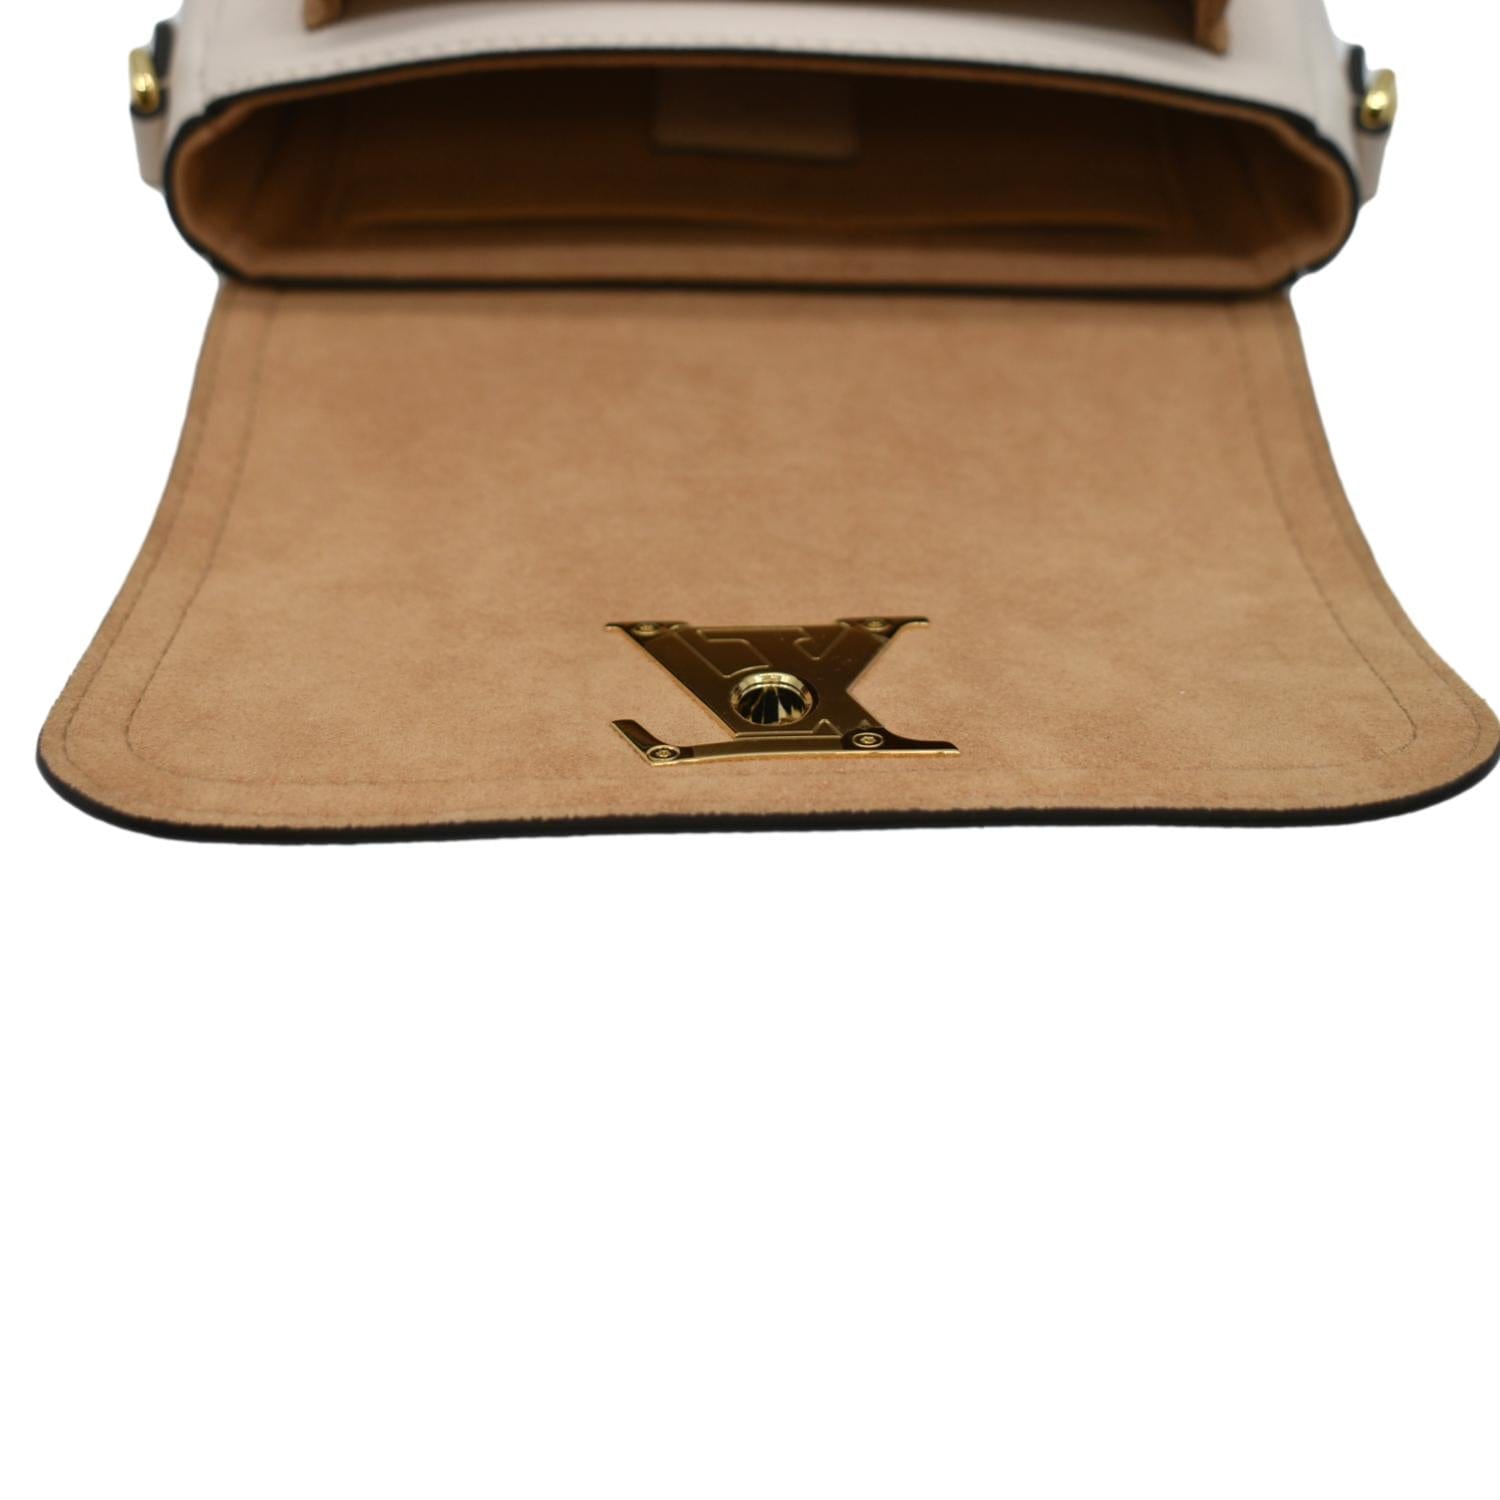 Louis Vuitton Lockme Tender Crossbody Bag Calfskin In Beige/ White